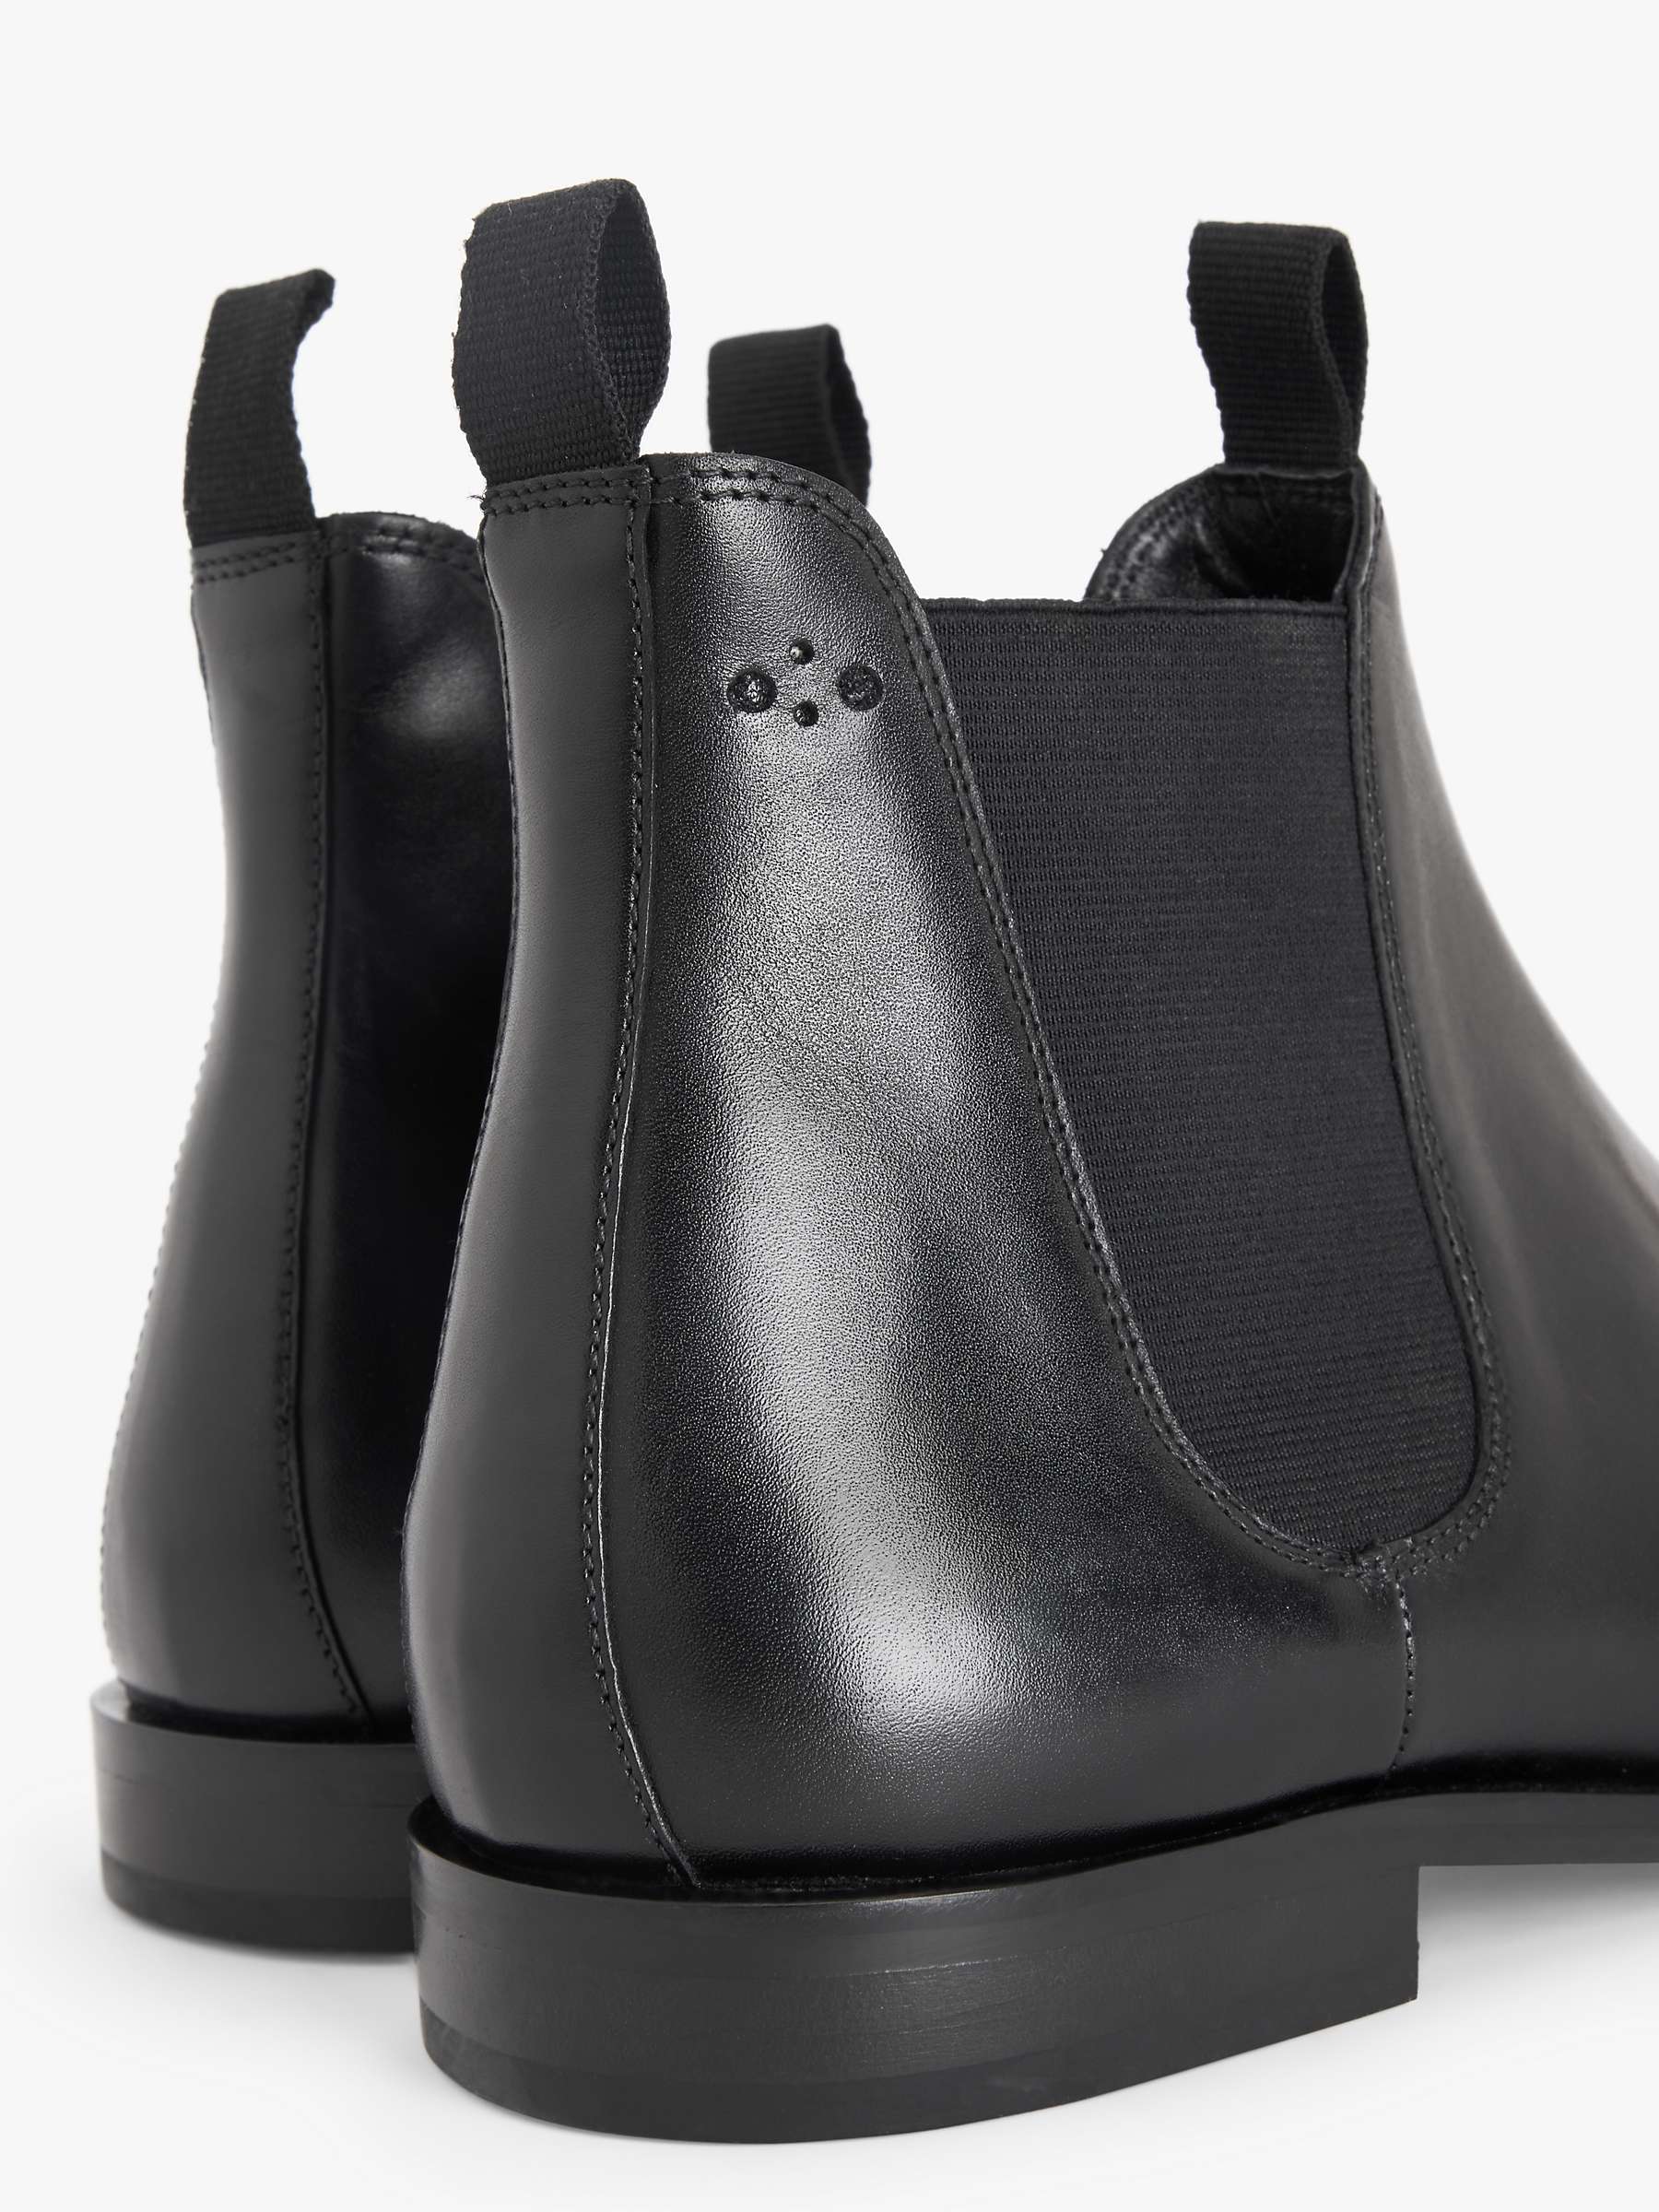 Buy John Lewis Elsworth Leather Chelsea Boots Online at johnlewis.com